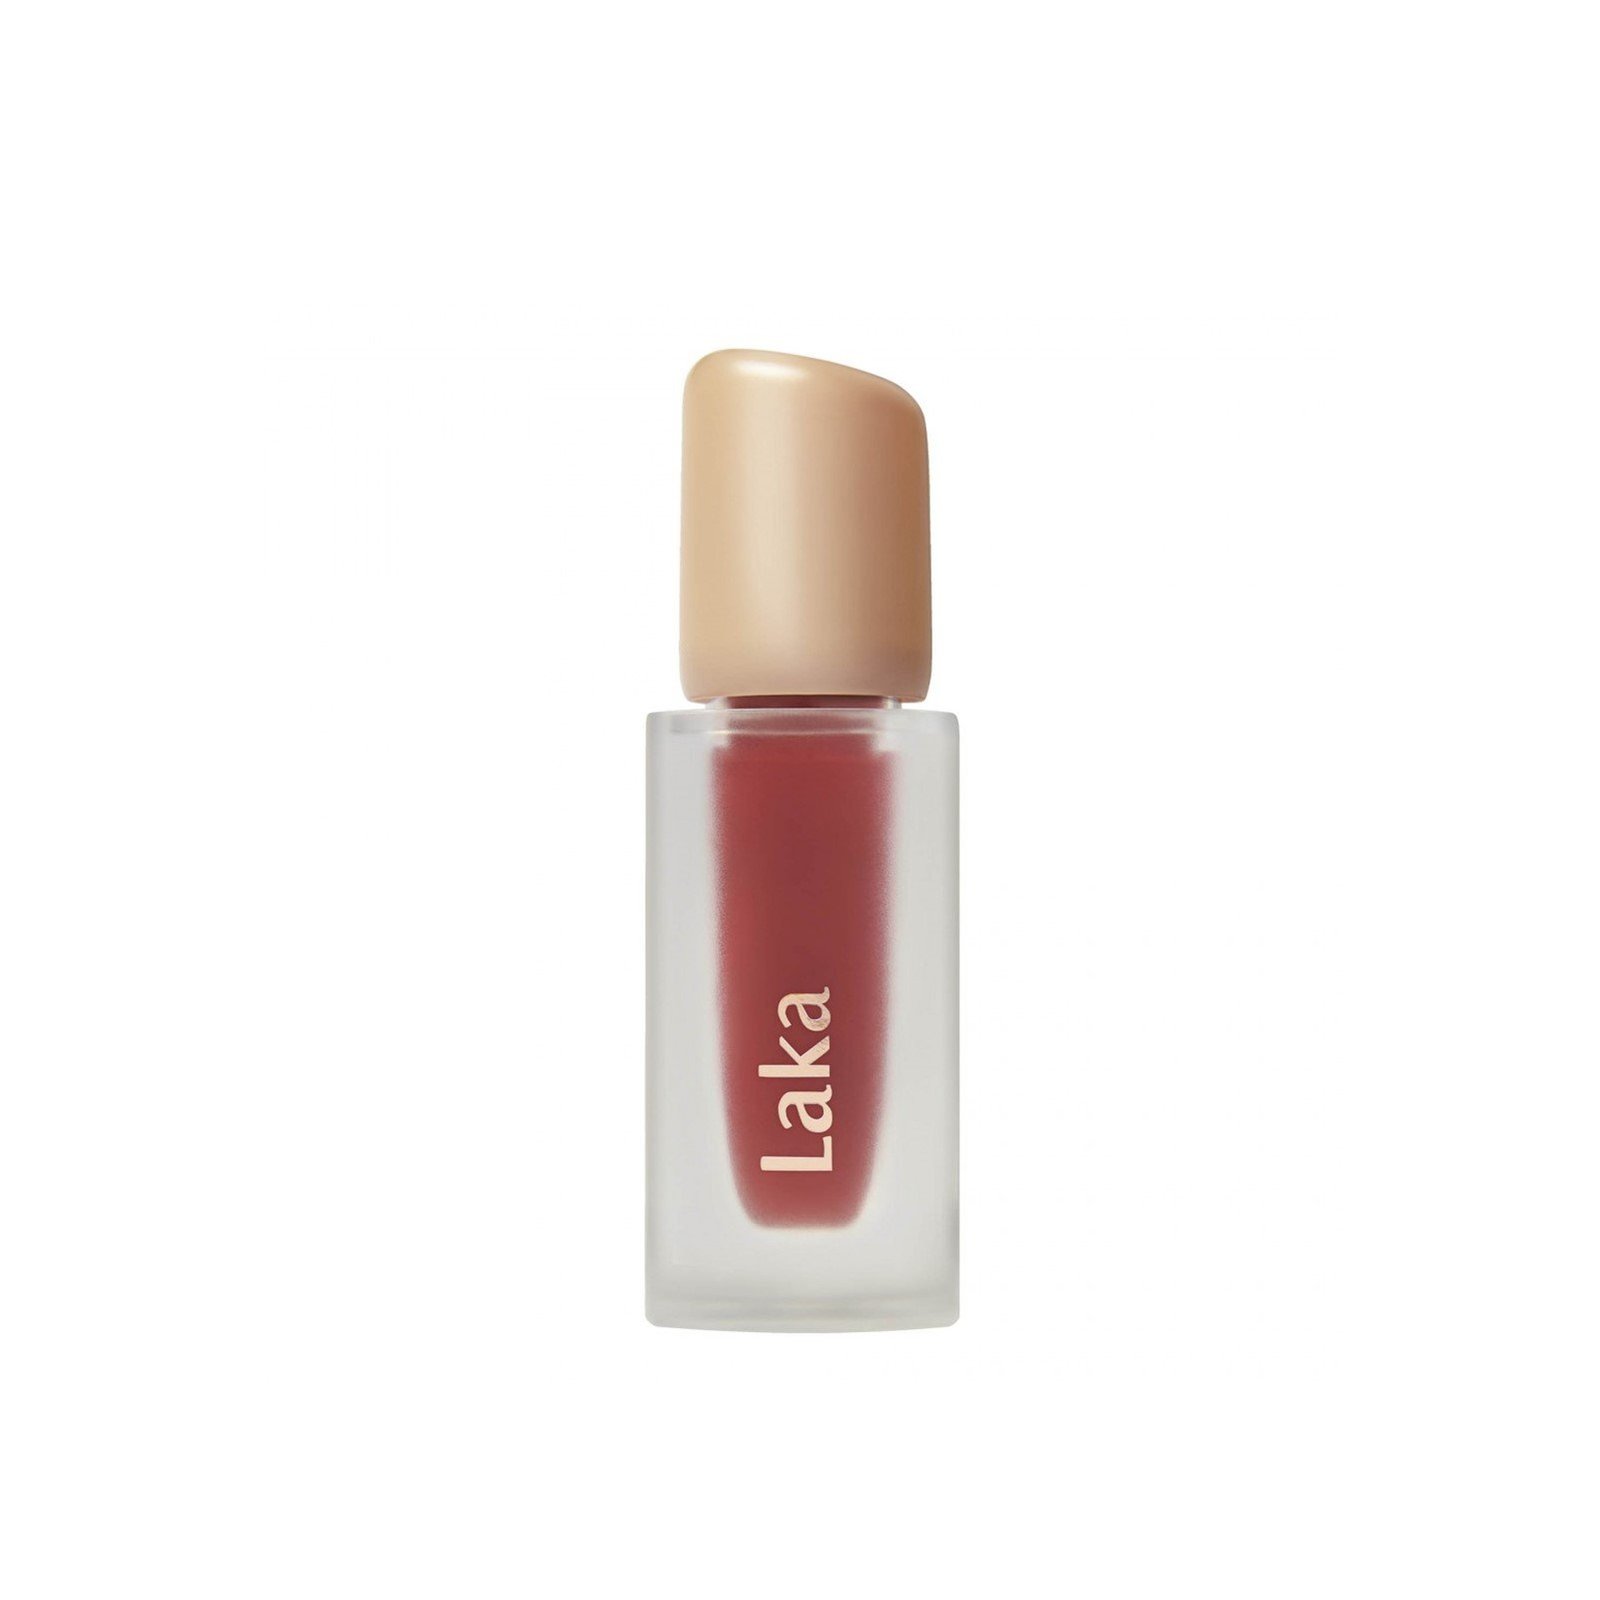 Laka Fruity Glam Lip Tint 116 Candid 4.5g (0.15 oz)